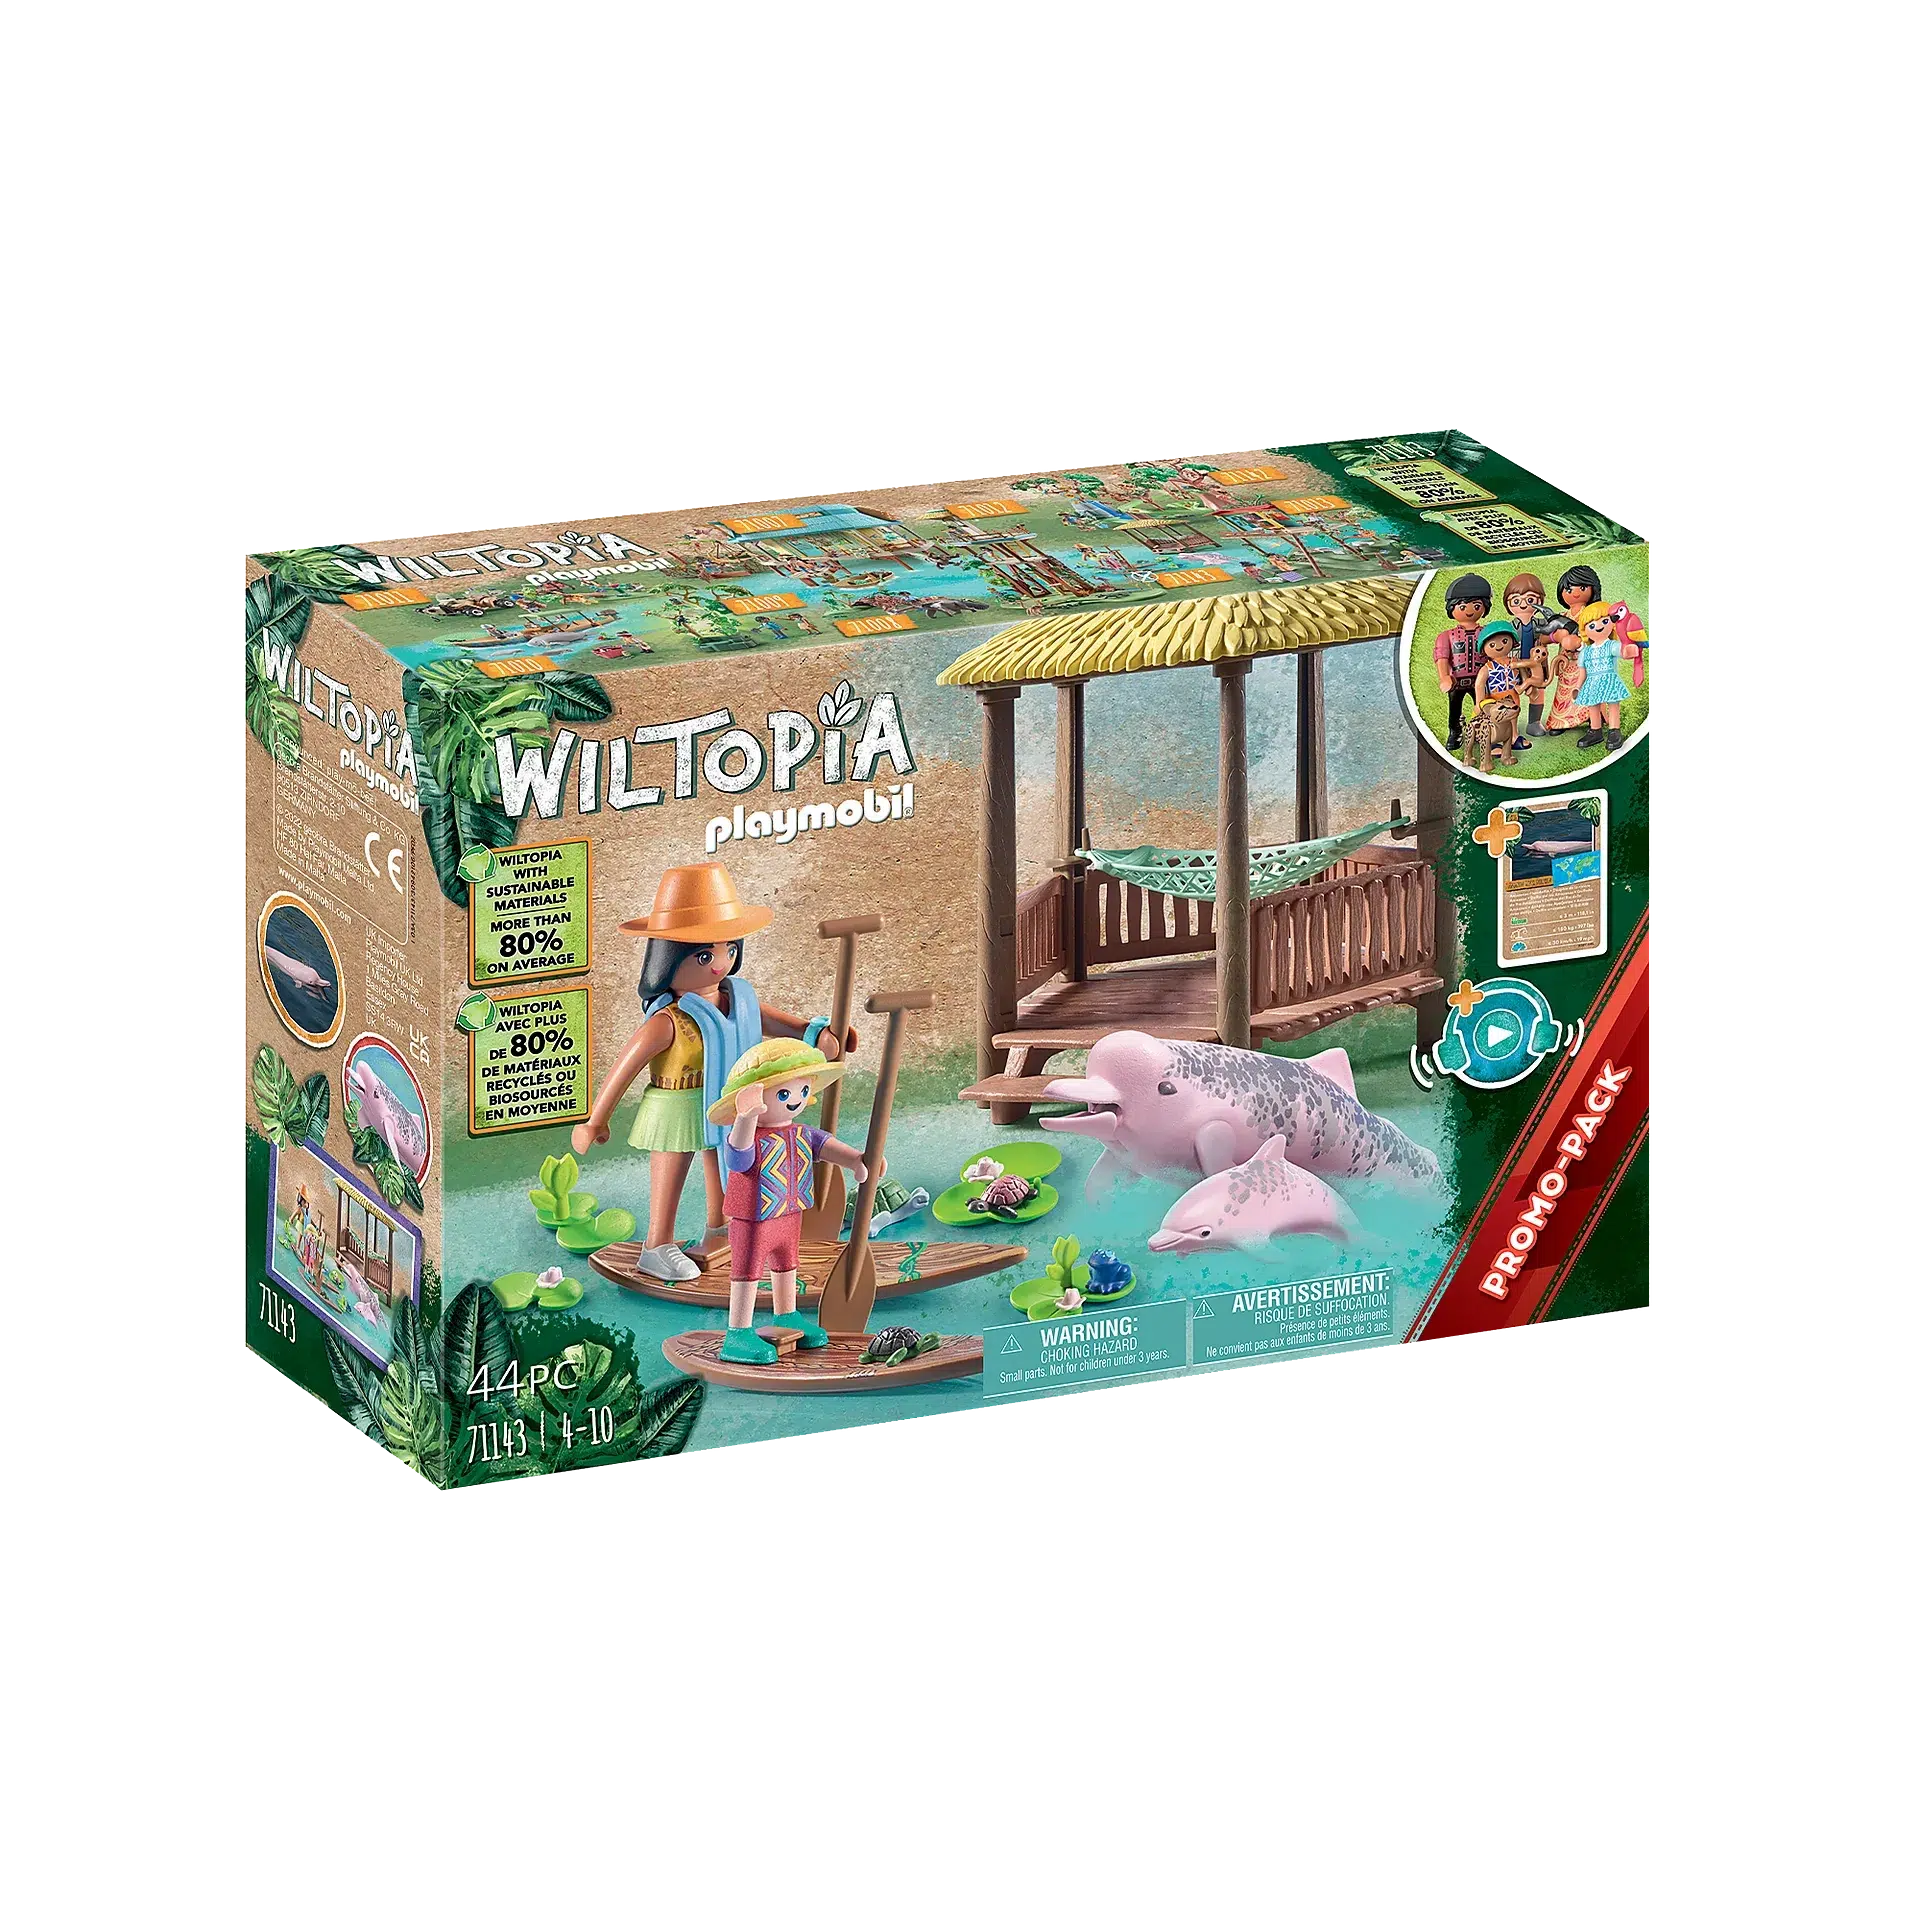 Wiltopia - Elephant at the Waterhole - 71294